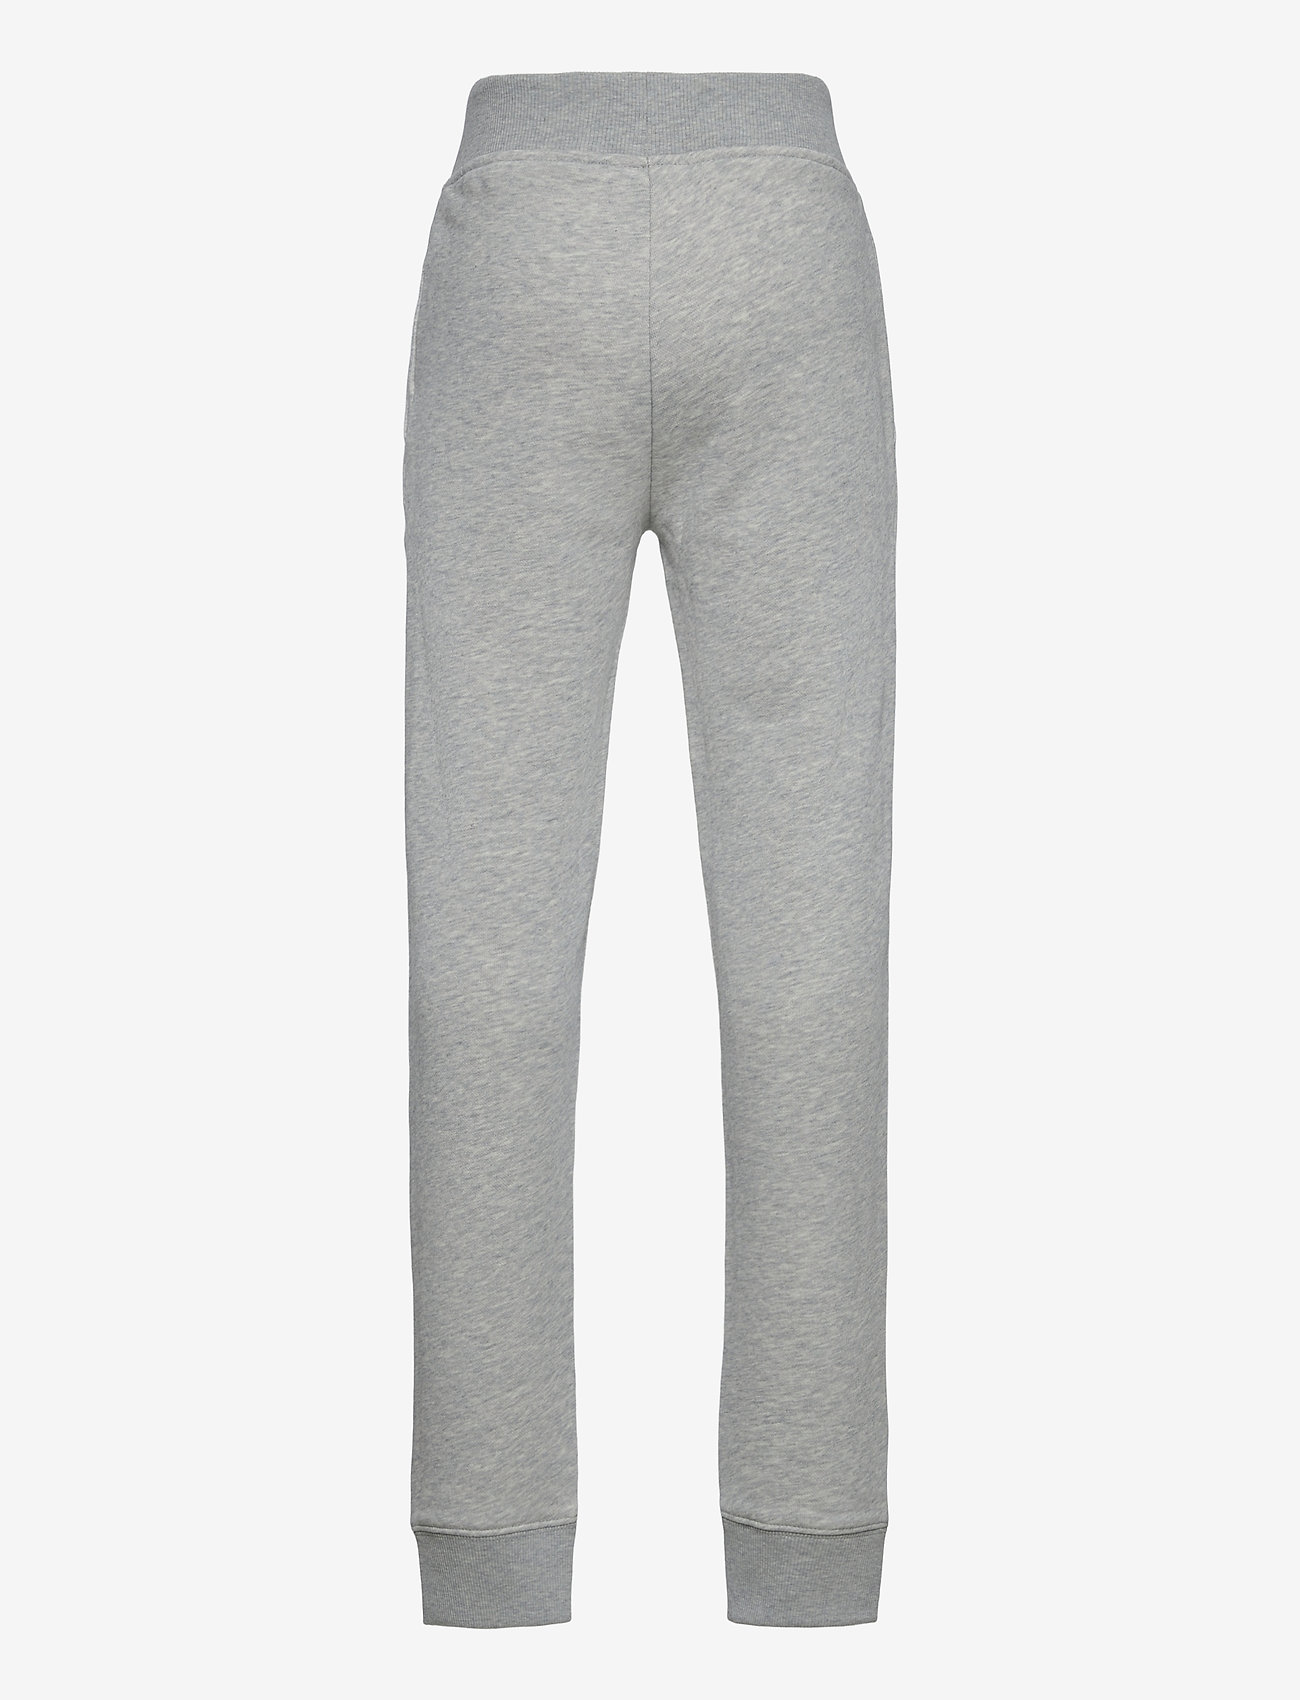 GANT - ARCHIVE SHIELD SWEAT PANTS - sweatpants - light grey melange - 1